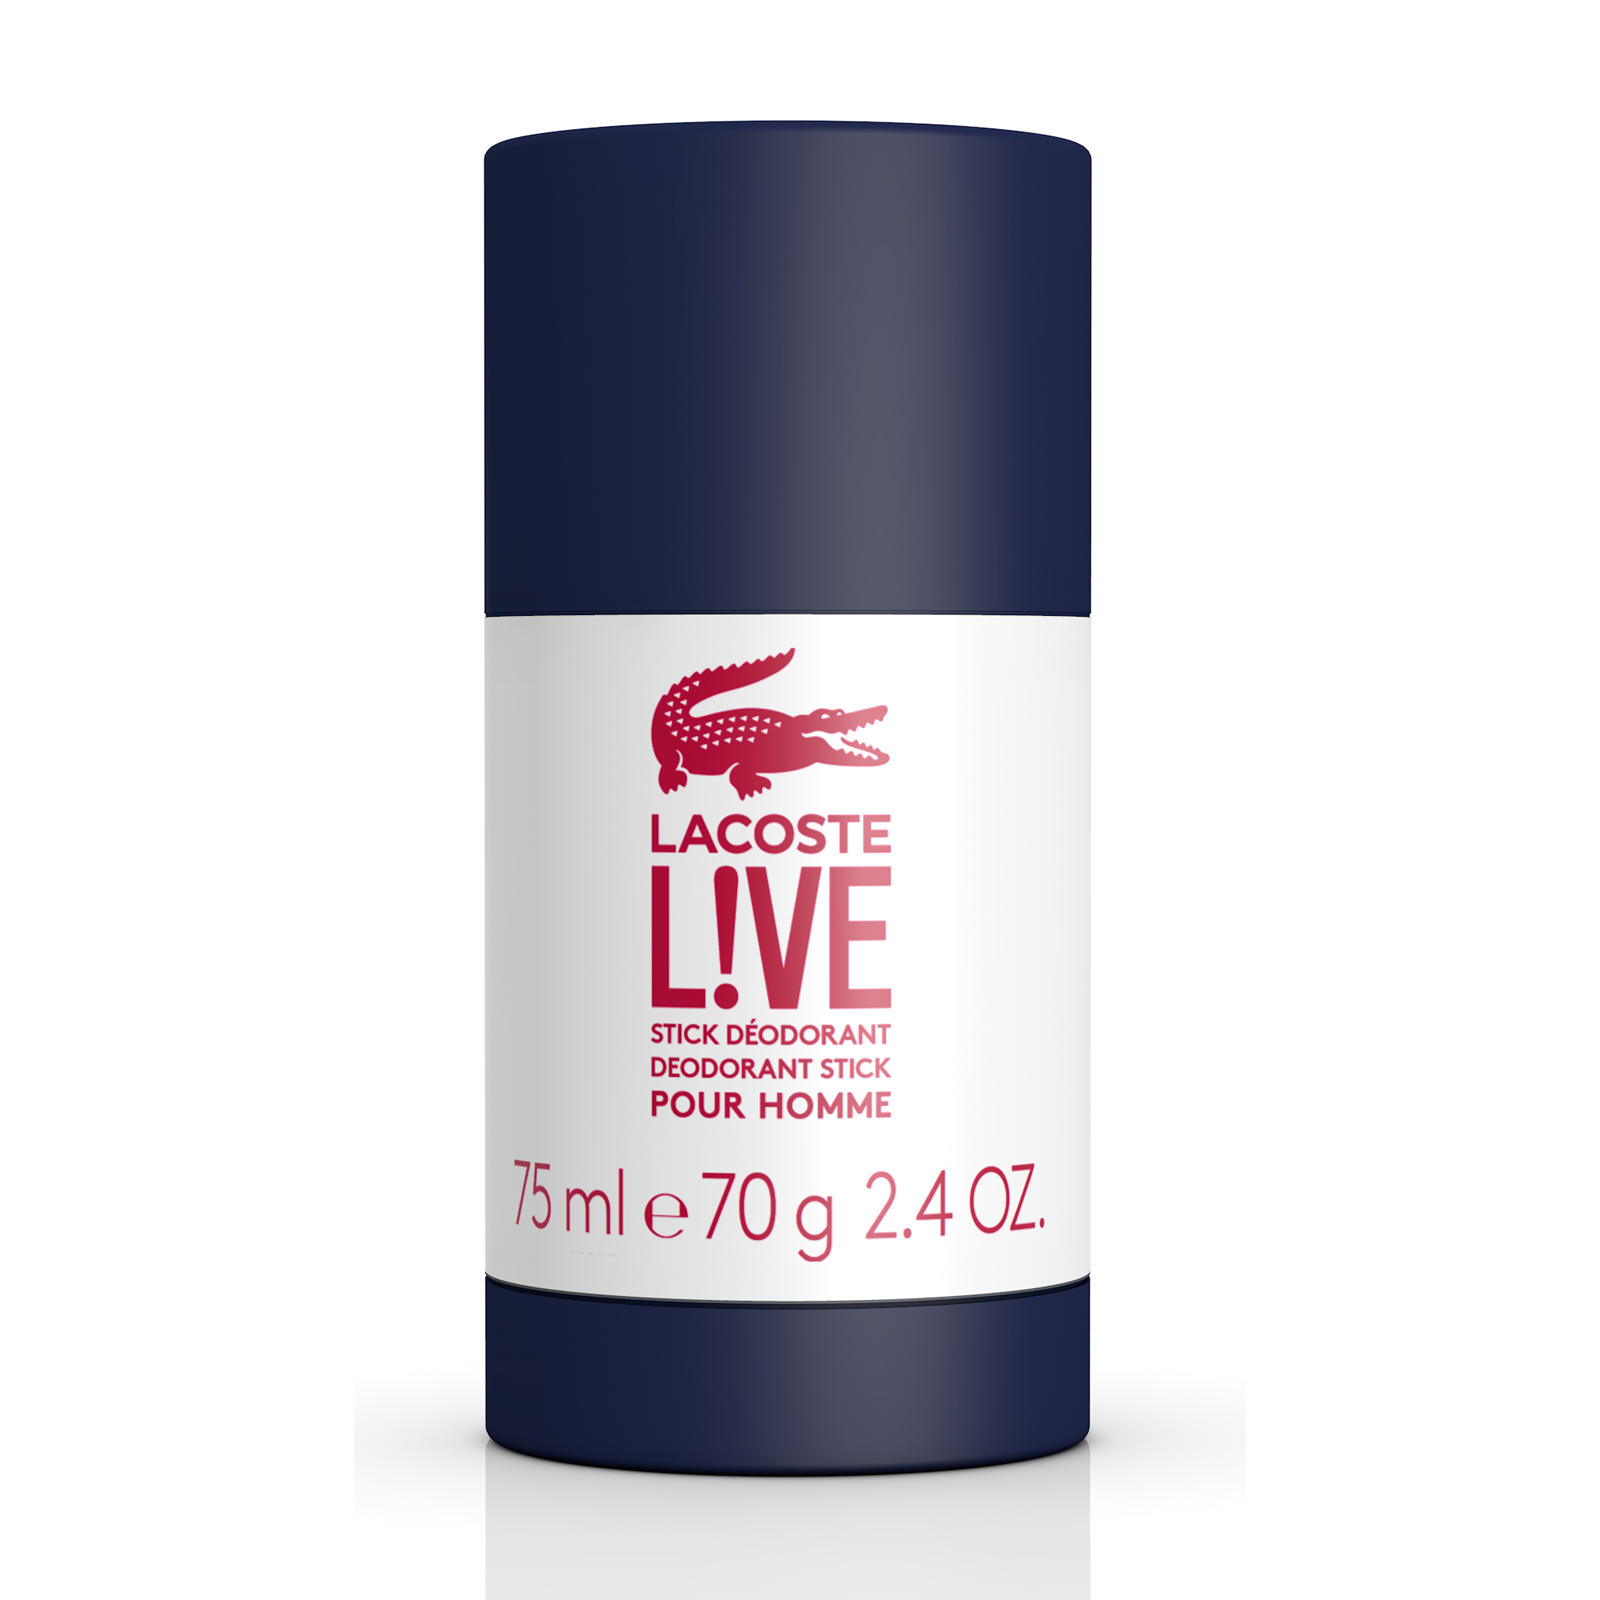 Lacoste - Live Deodorant Stick ml.